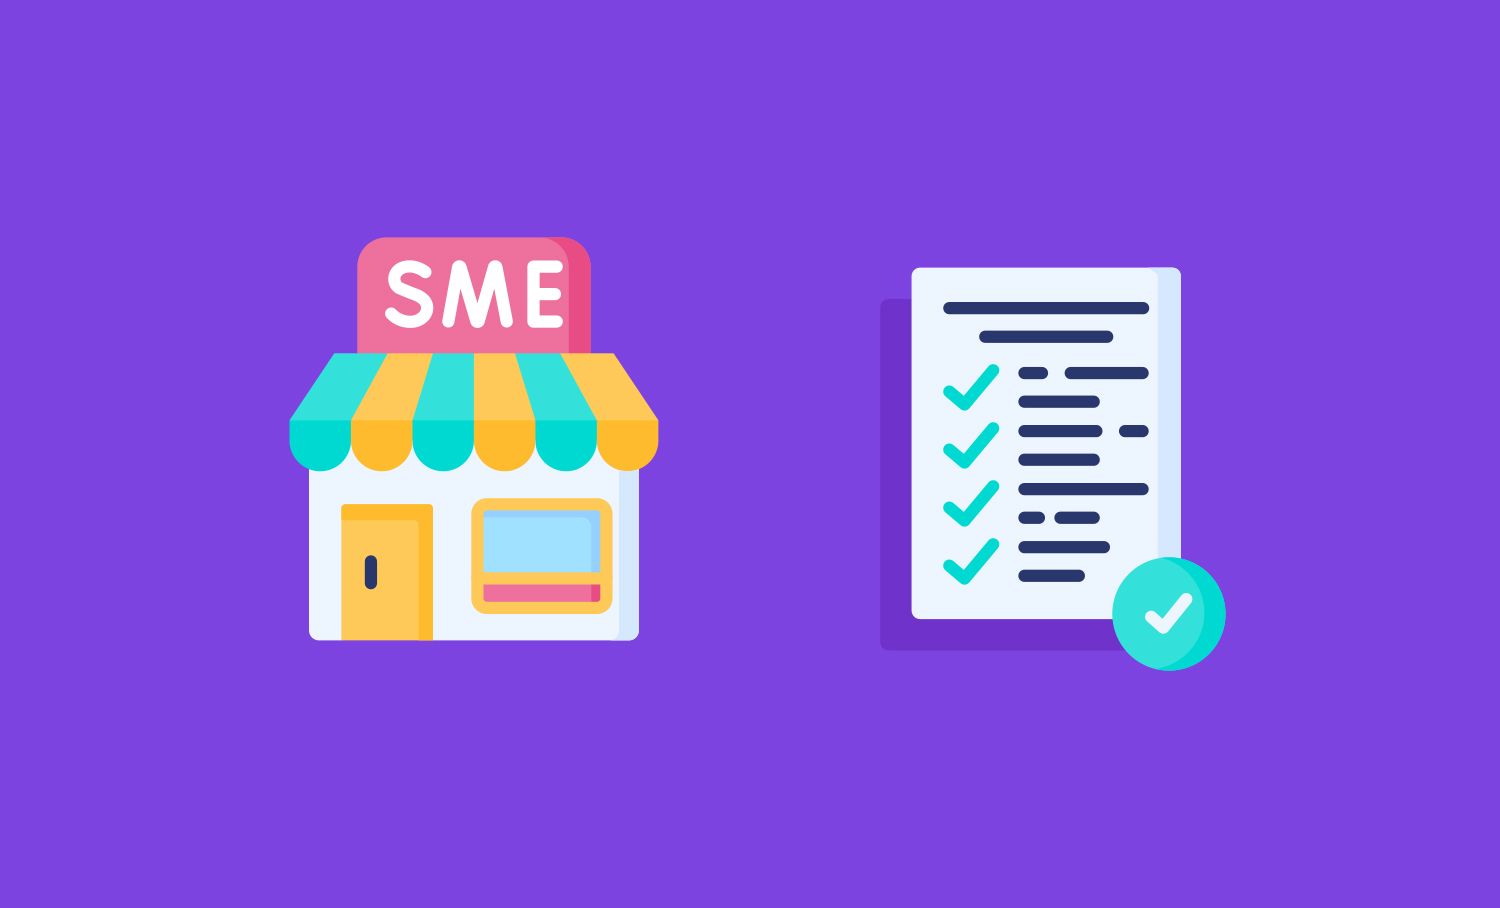 SME shopfront alongside a sustainabilitycompliance checklist